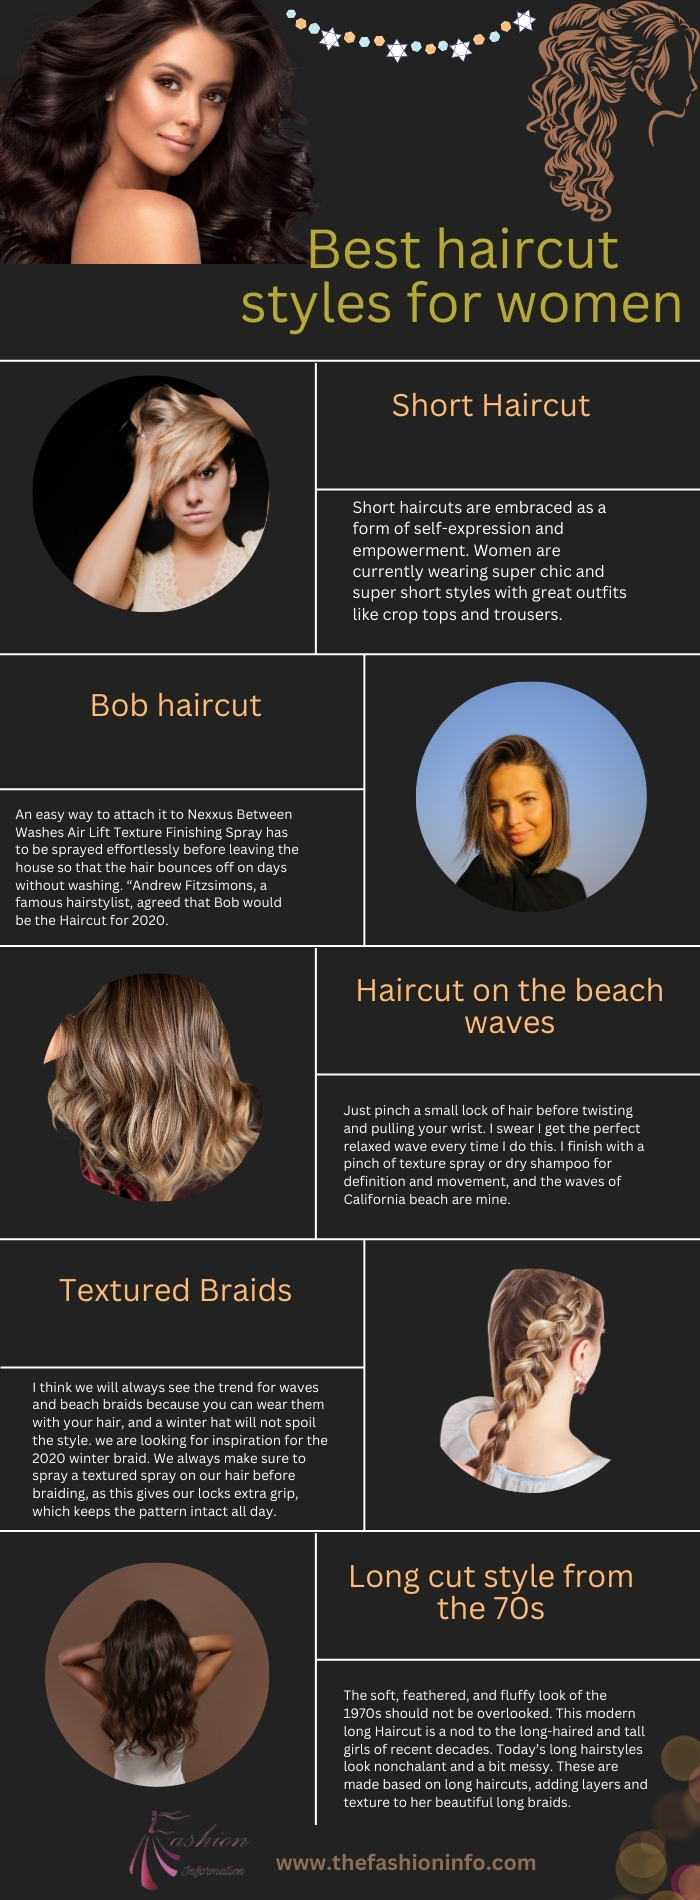 Best haircut styles for women 